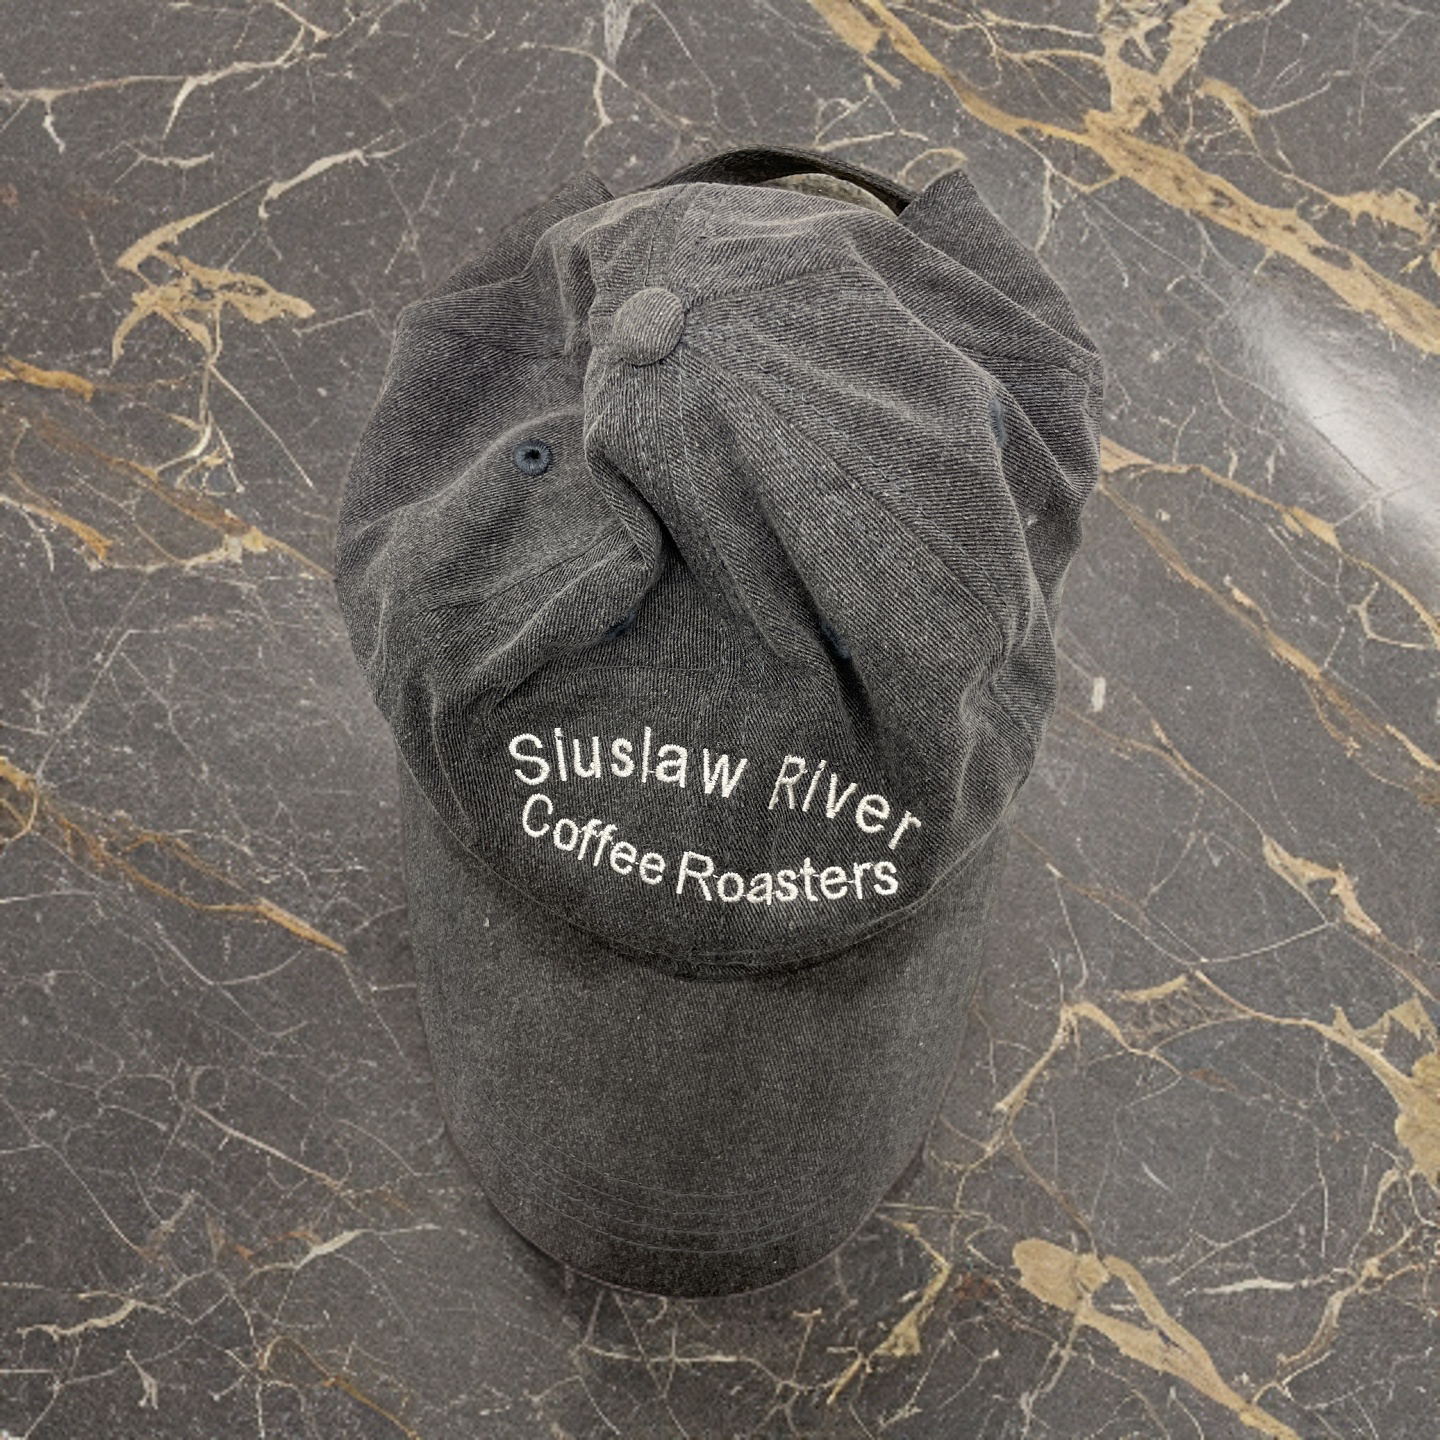 Rubynee Vintage y2k grey suede baseball cap with siuslaw river coffee roasters crest design